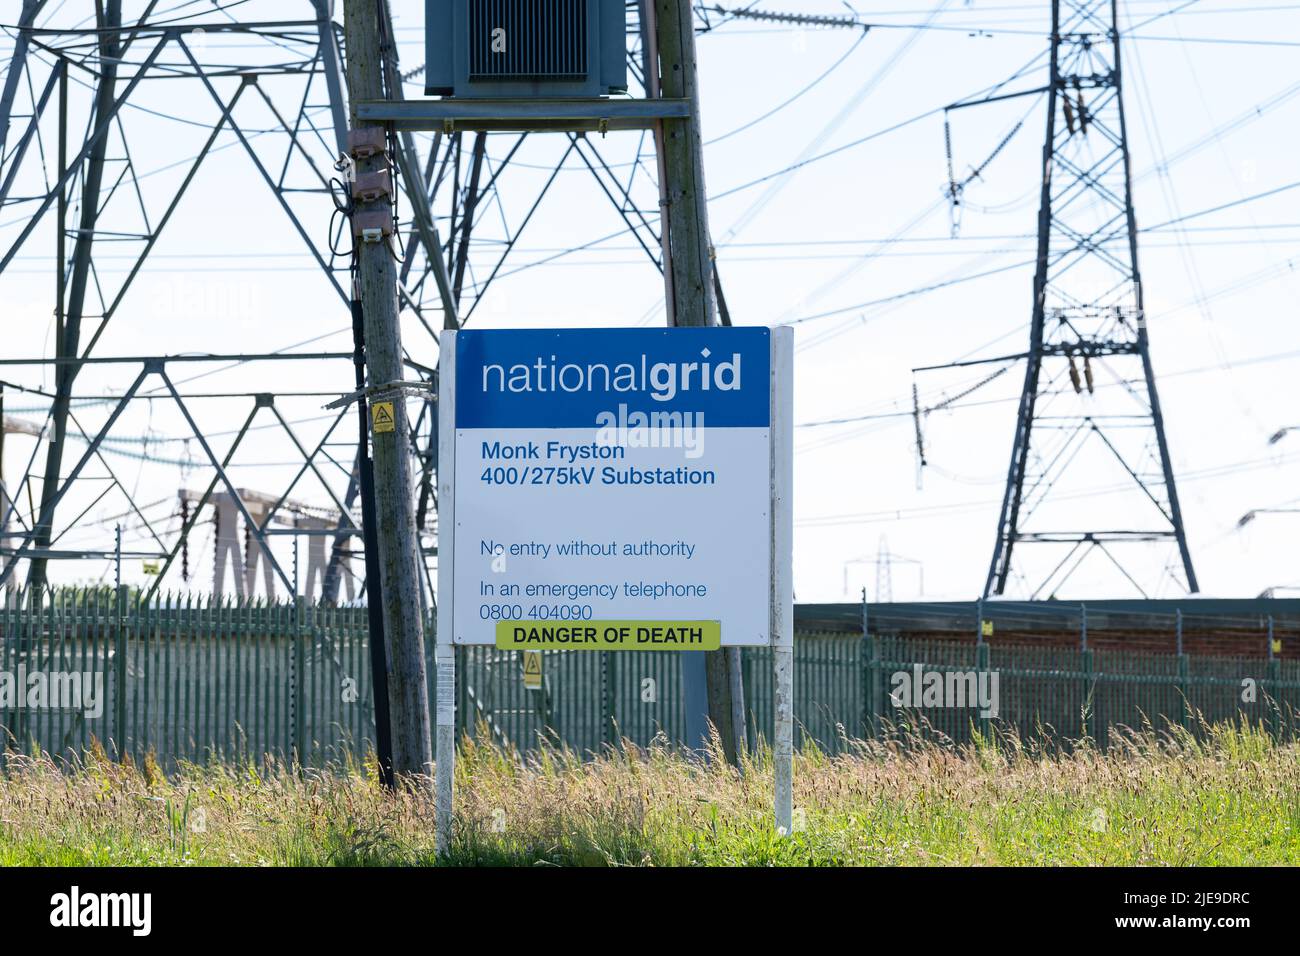 Monk Fryston Substation national grid sign, North Yorkshire, England, UK Stock Photo